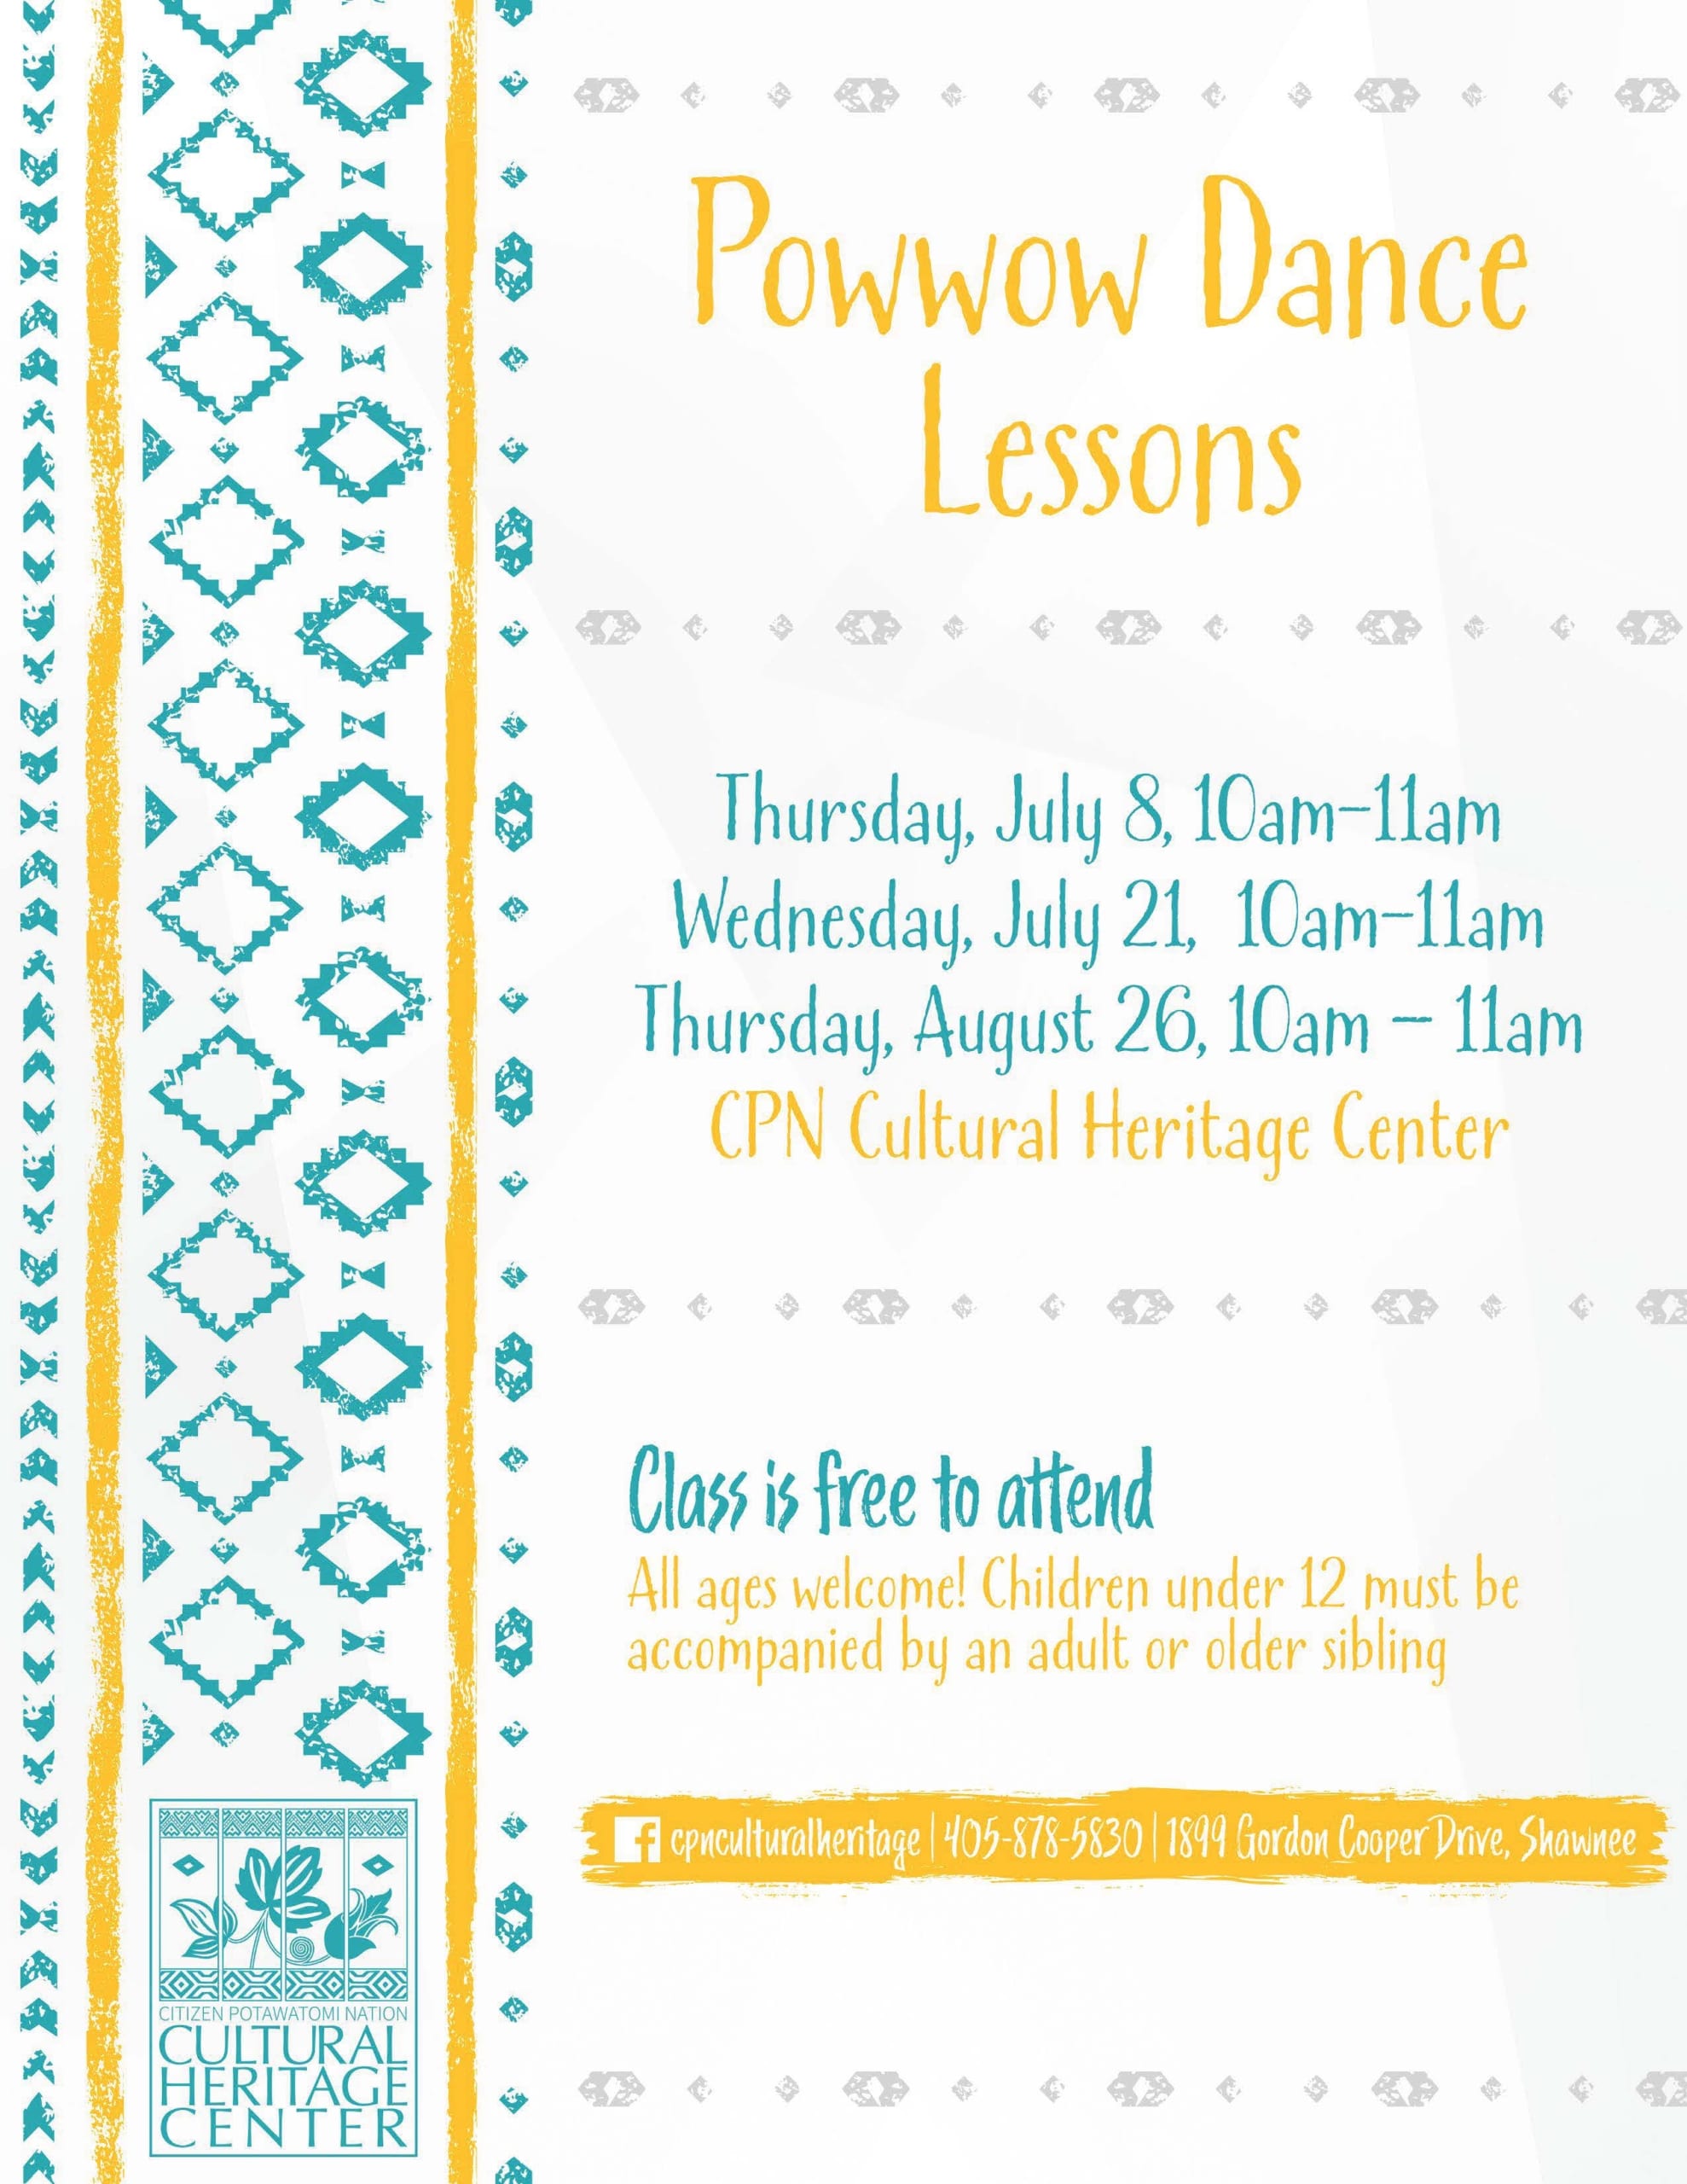 Powwow Dance Lessons